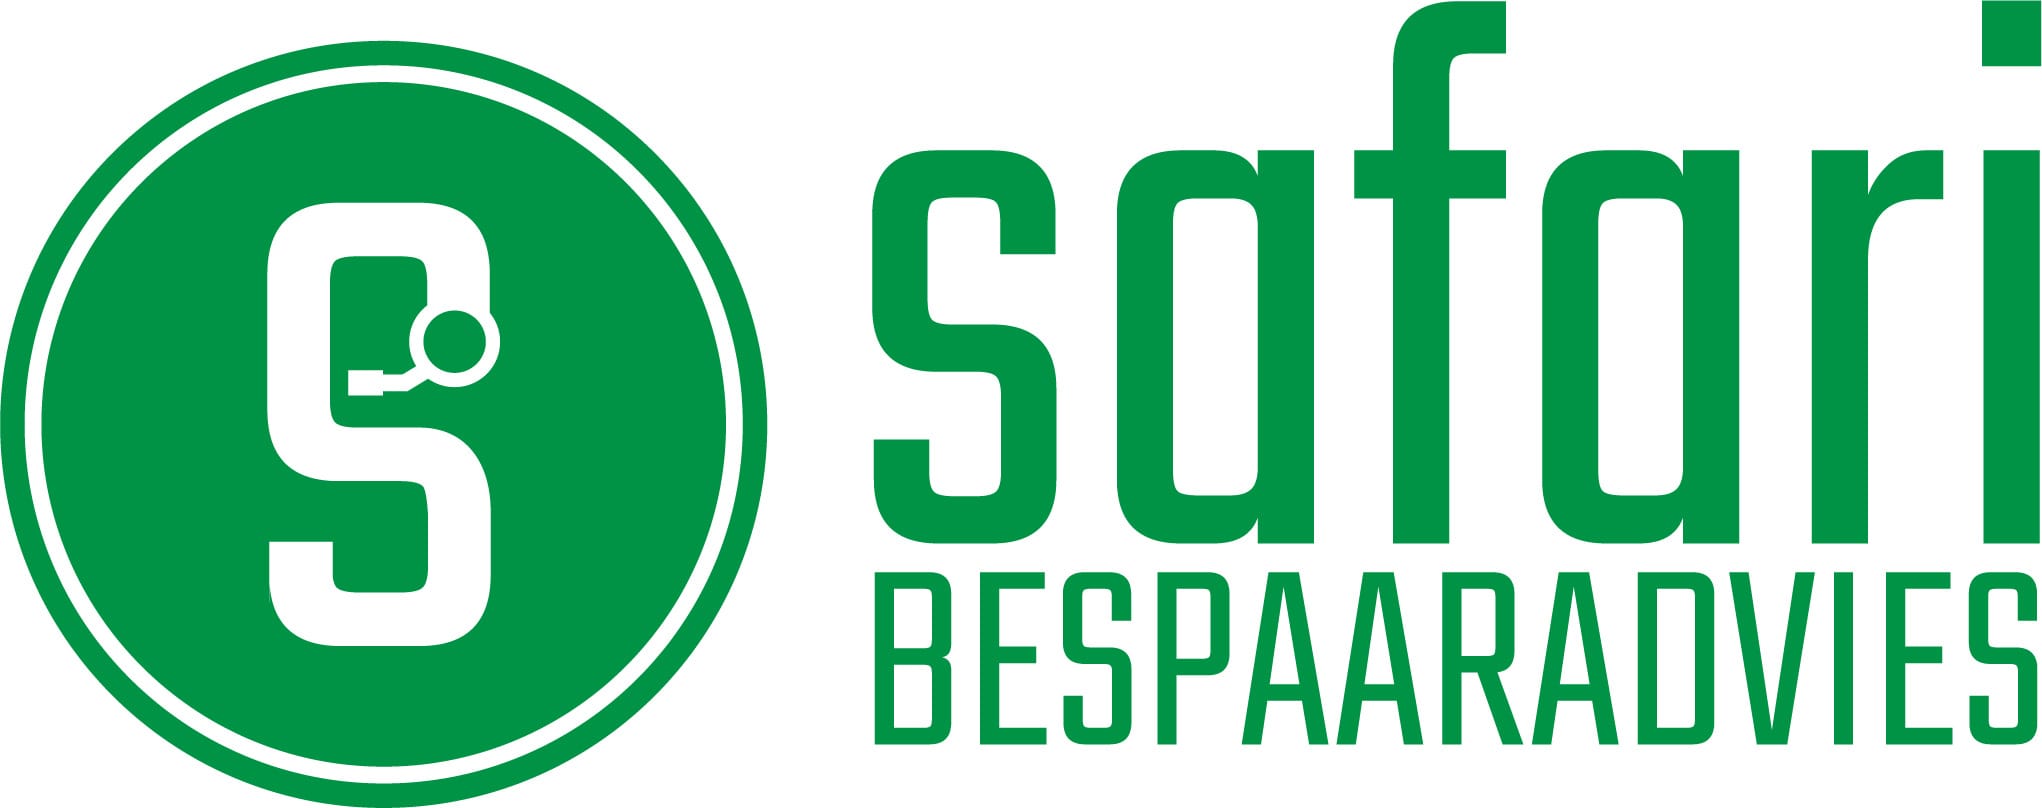 Logo Safari Bespaaradvies